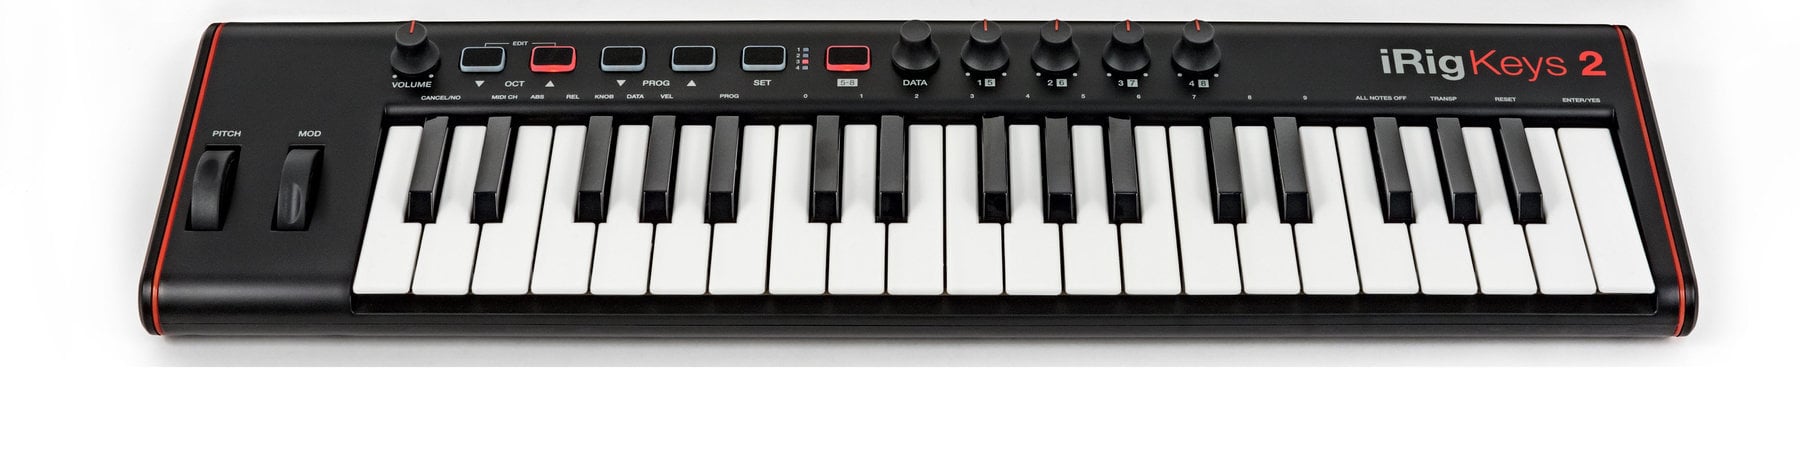 MIDI keyboard IK Multimedia iRig Keys 2